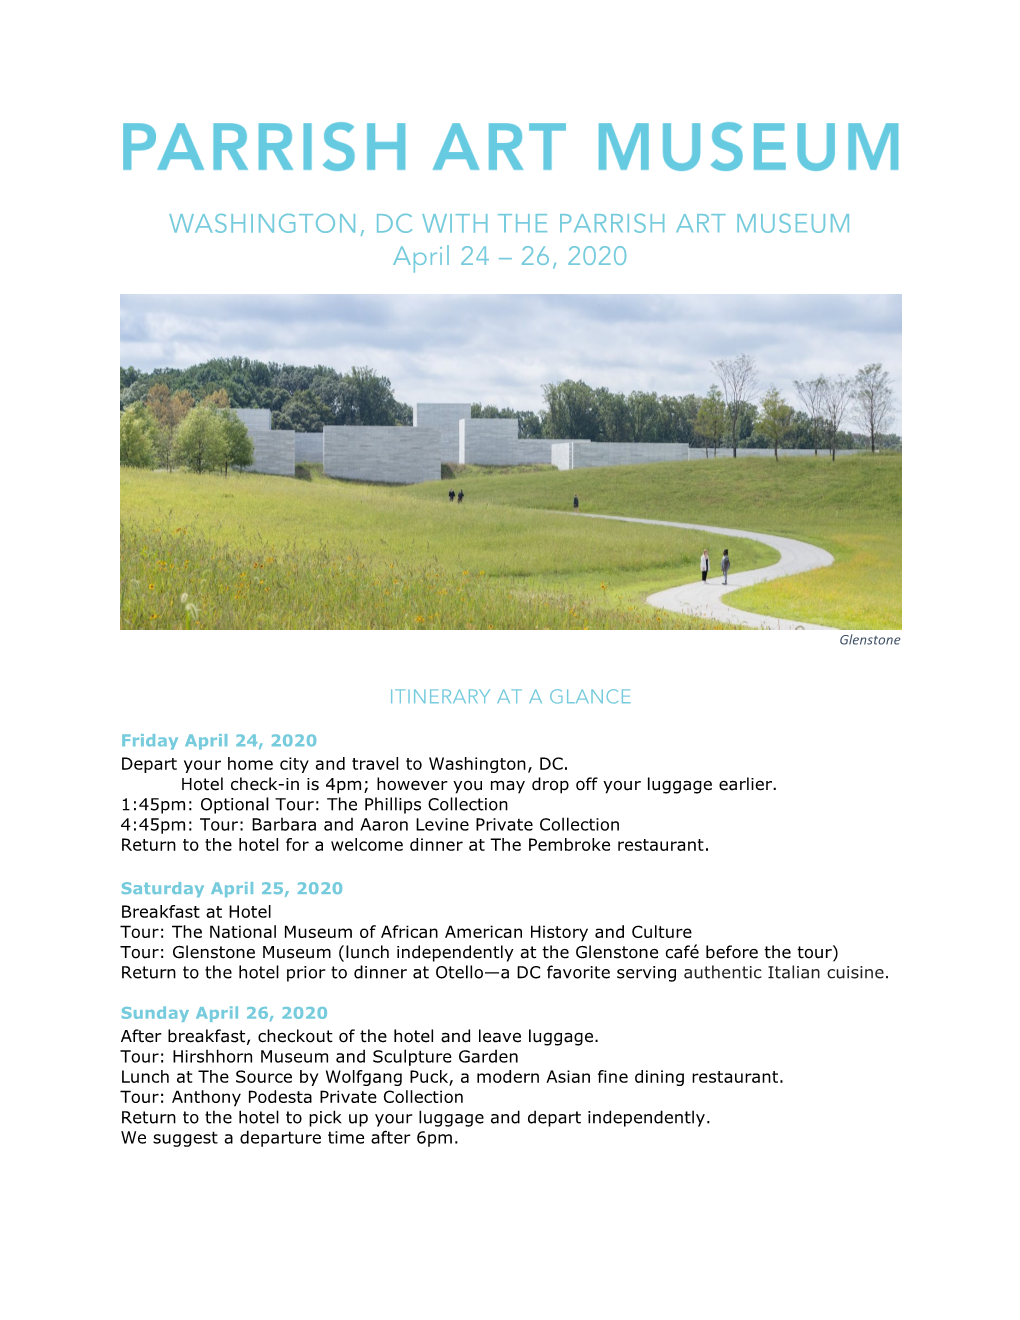 WASHINGTON, DC with the PARRISH ART MUSEUM April 24 – 26, 2020